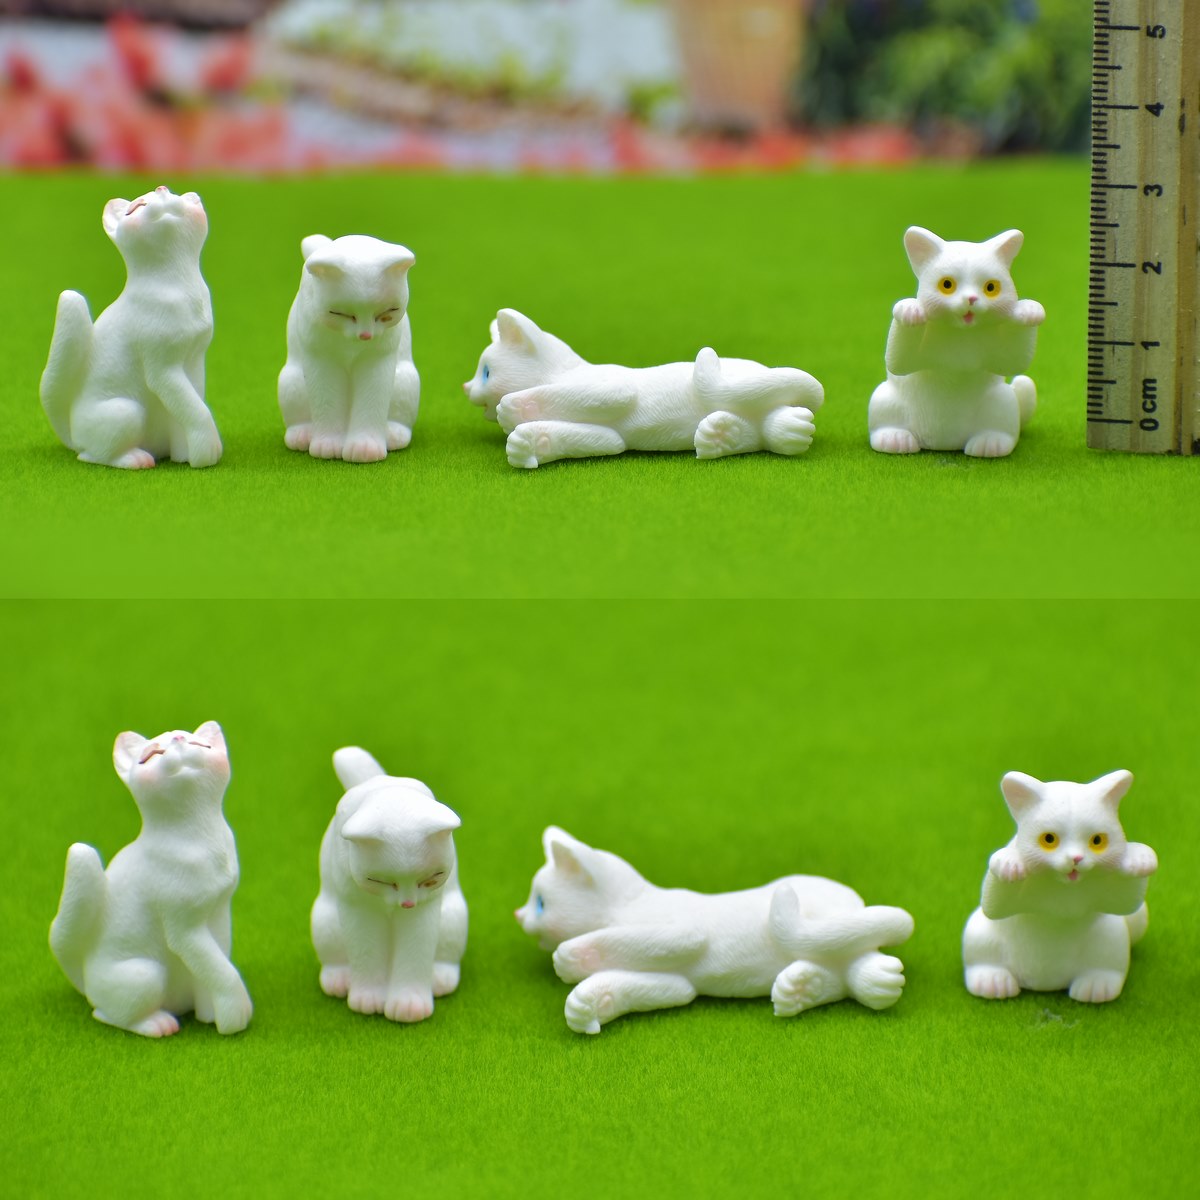 jags-mumbai Miniature Miniature Model Cat White Set (4 Pieces)